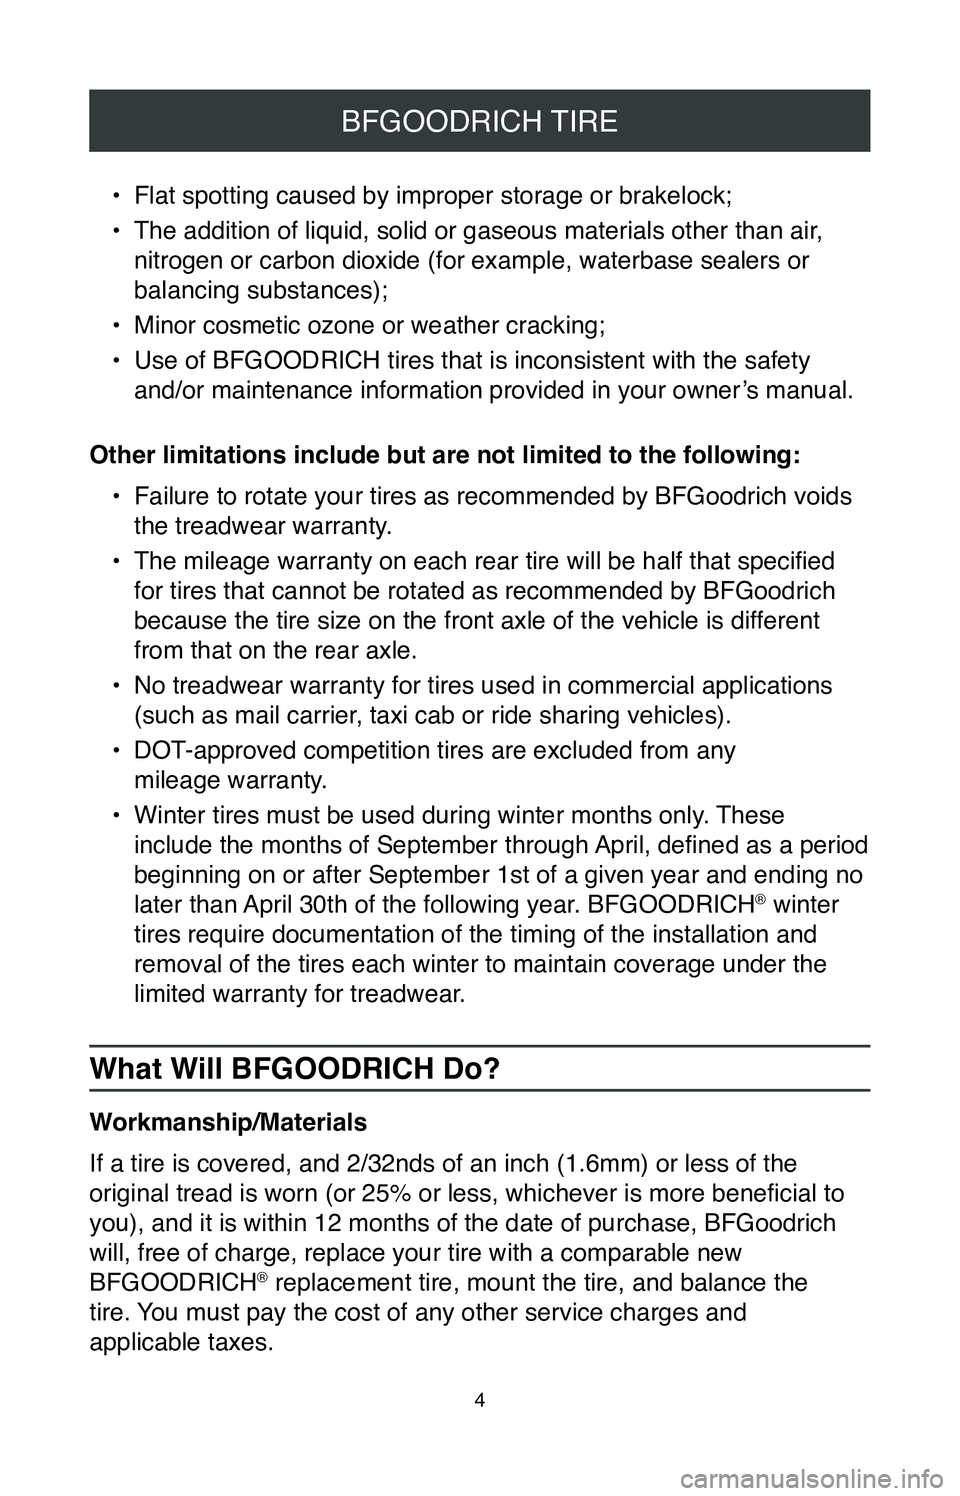 TOYOTA COROLLA 2020  Warranties & Maintenance Guides (in English) 4
BFGOODRICH TIRE
